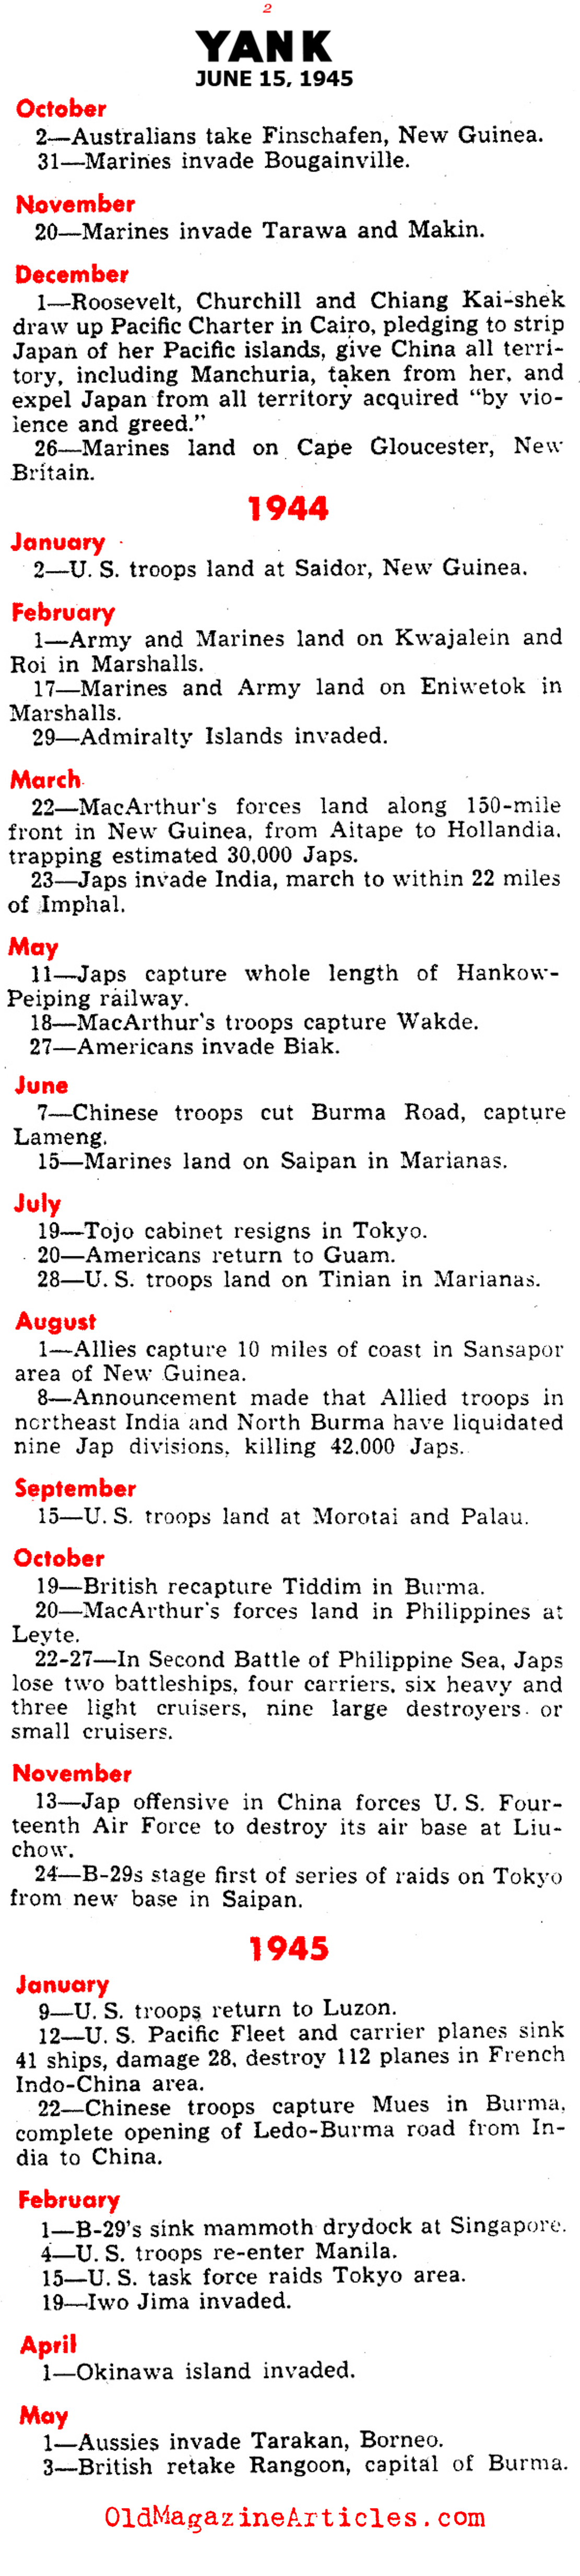 A Pacific War Chronology (Yank Magazine, 1945)